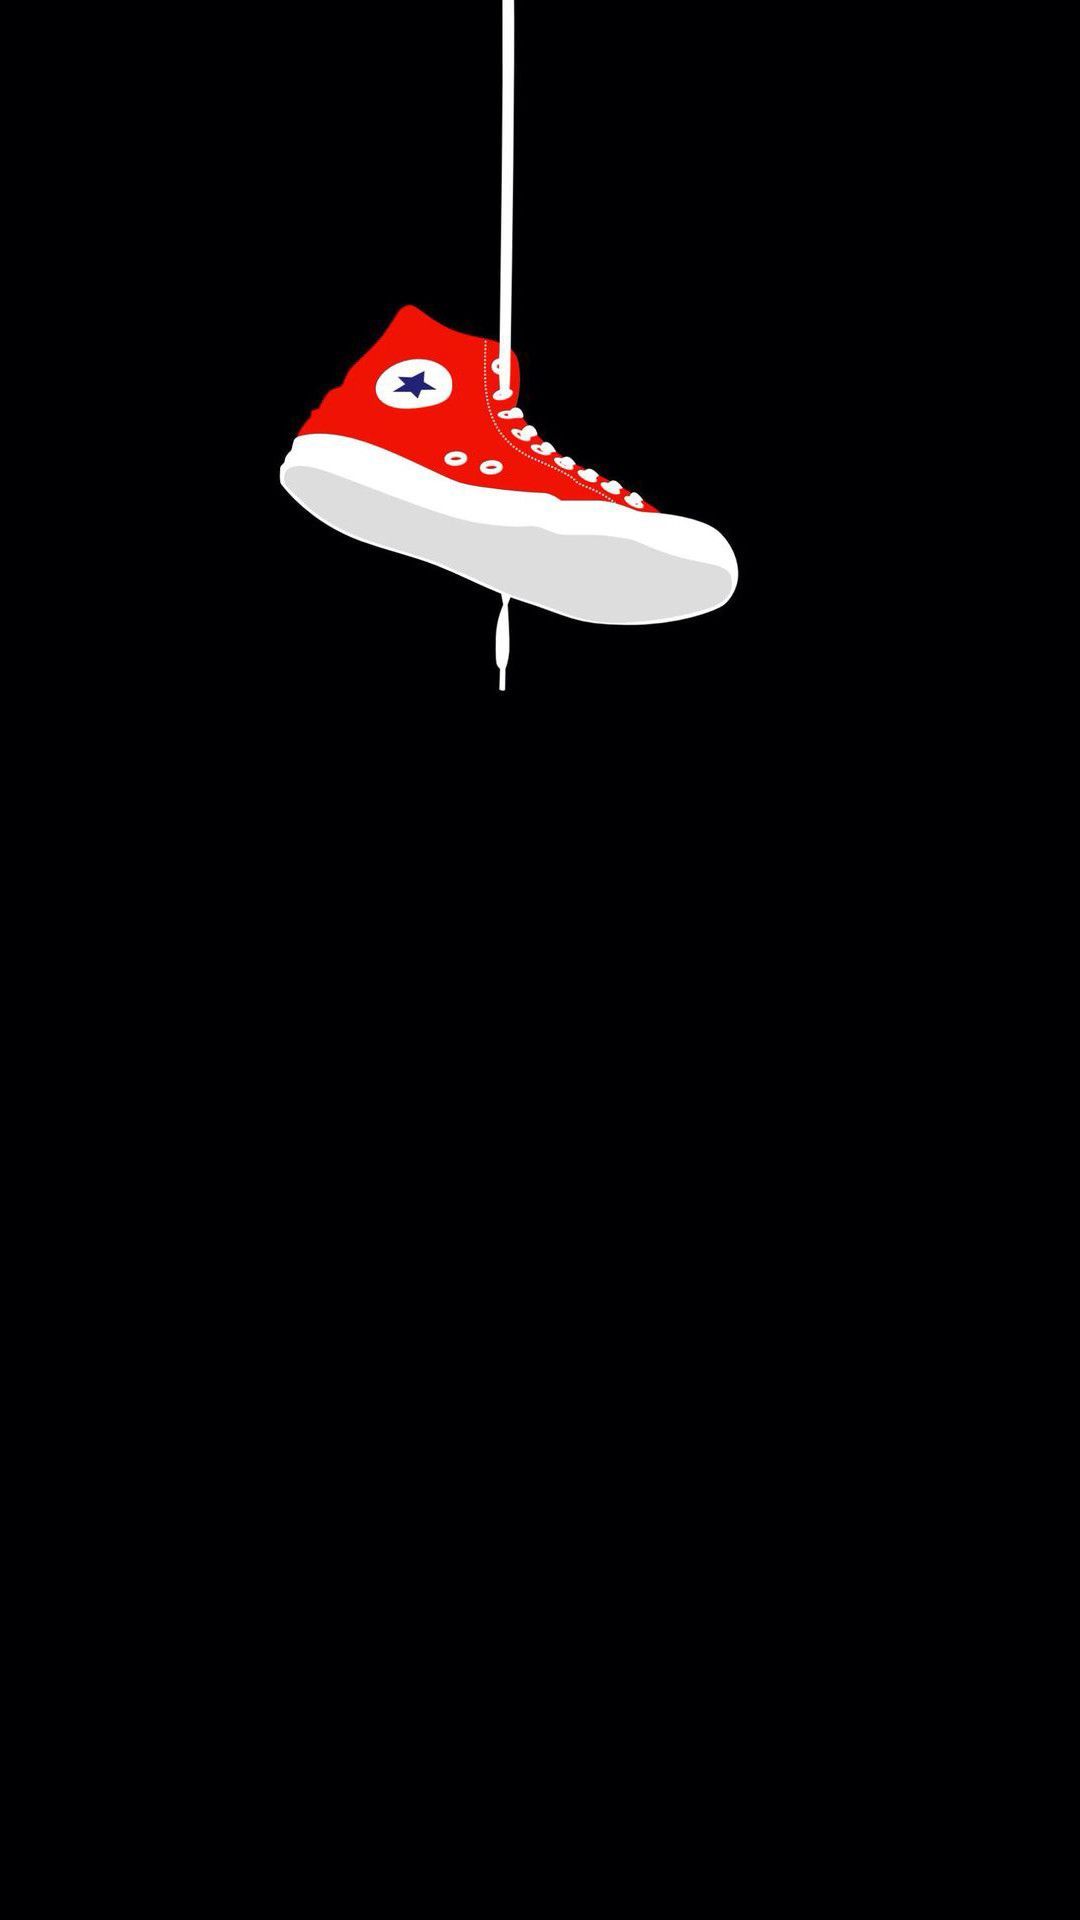 Free download Air Jordan 4 Shoes Backgrounds For Iphone 5 photos Iphone  Backgrounds 640x1136 for your Desktop Mobile  Tablet  Explore 49 Air  Jordan iPhone Wallpaper  Nike Air Jordan Wallpaper